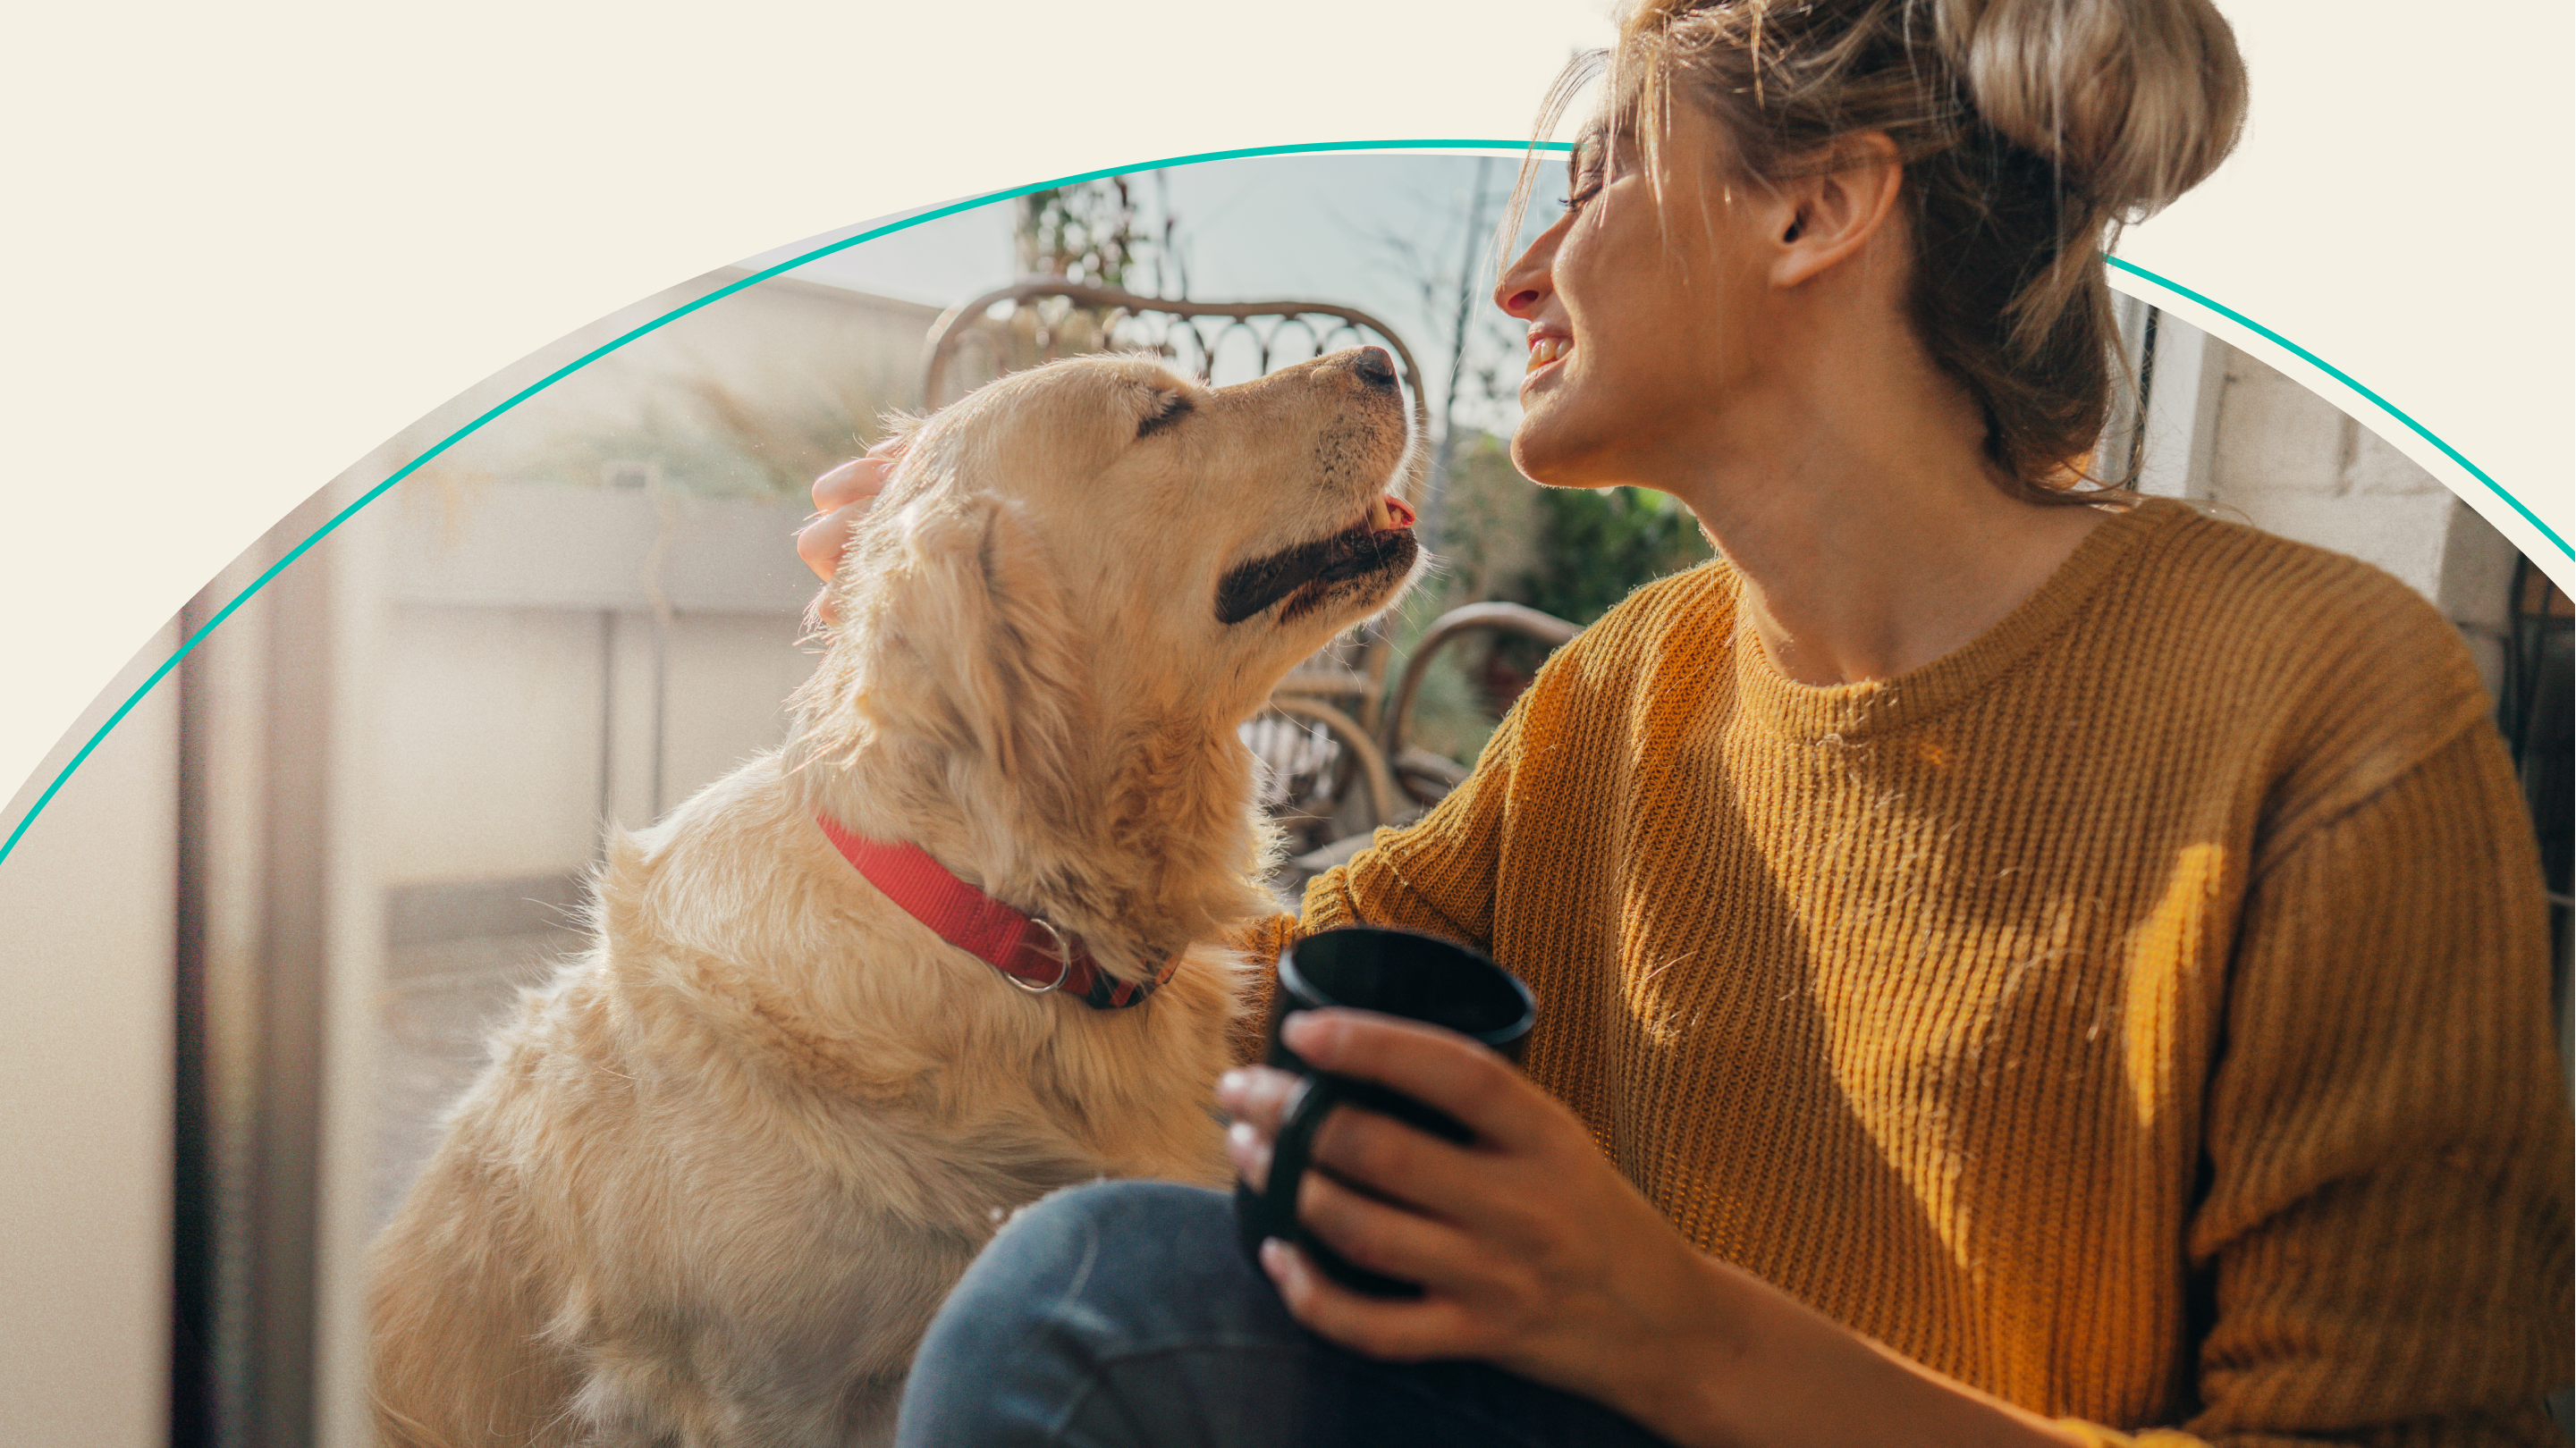 Woman enjoys sunlight with her dog and a coffee mug